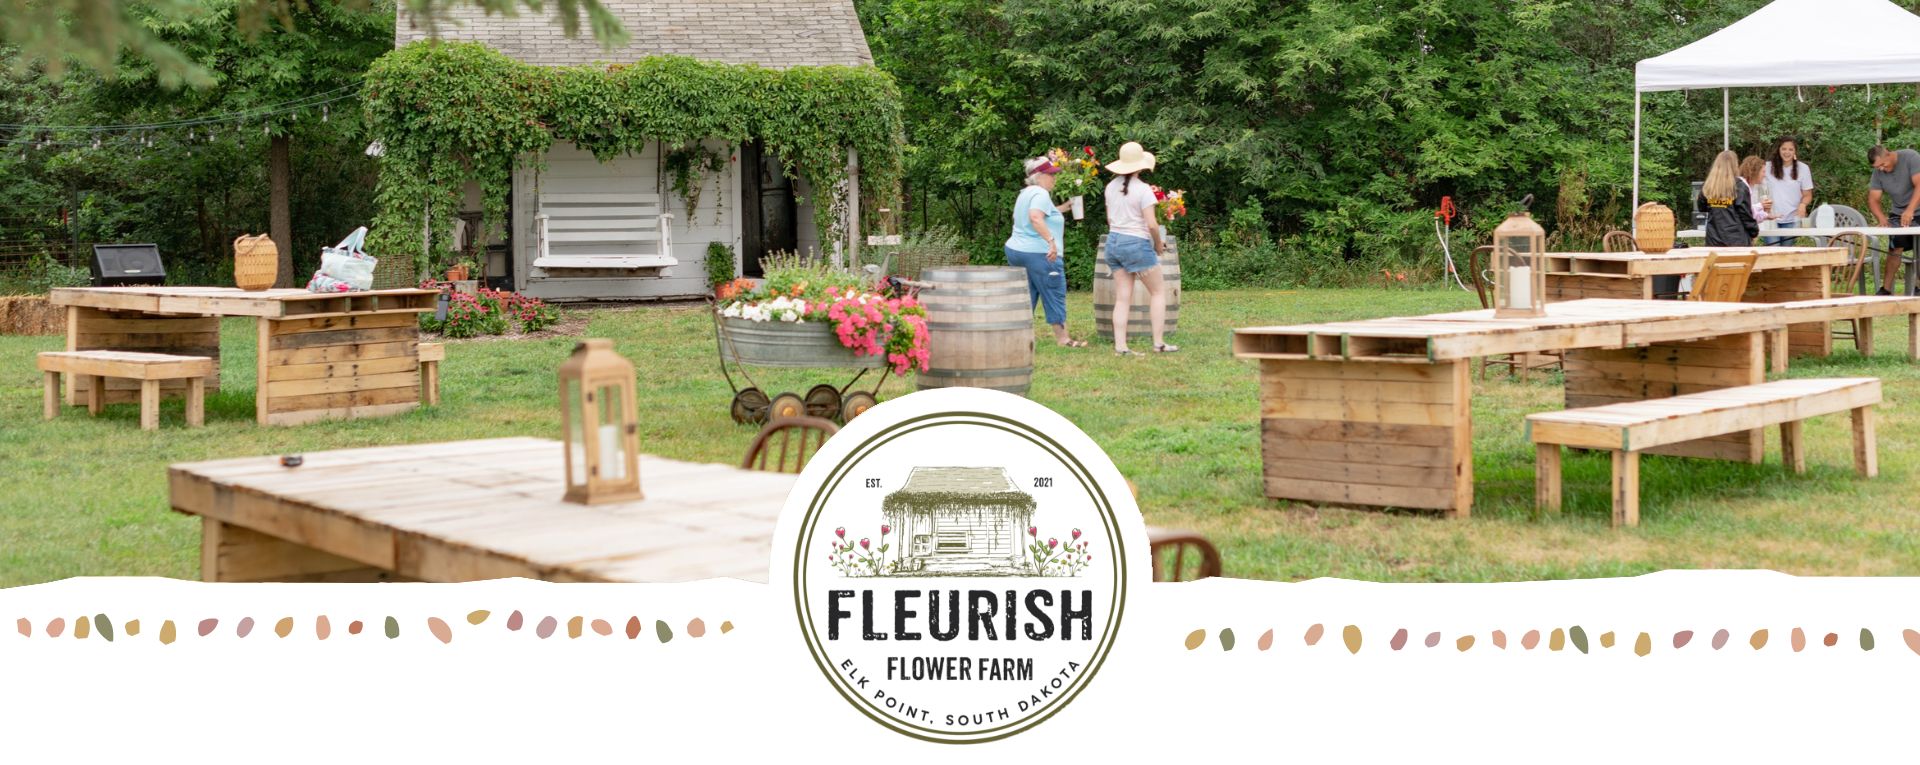 Fleurish Flower Farm You-Pick event.